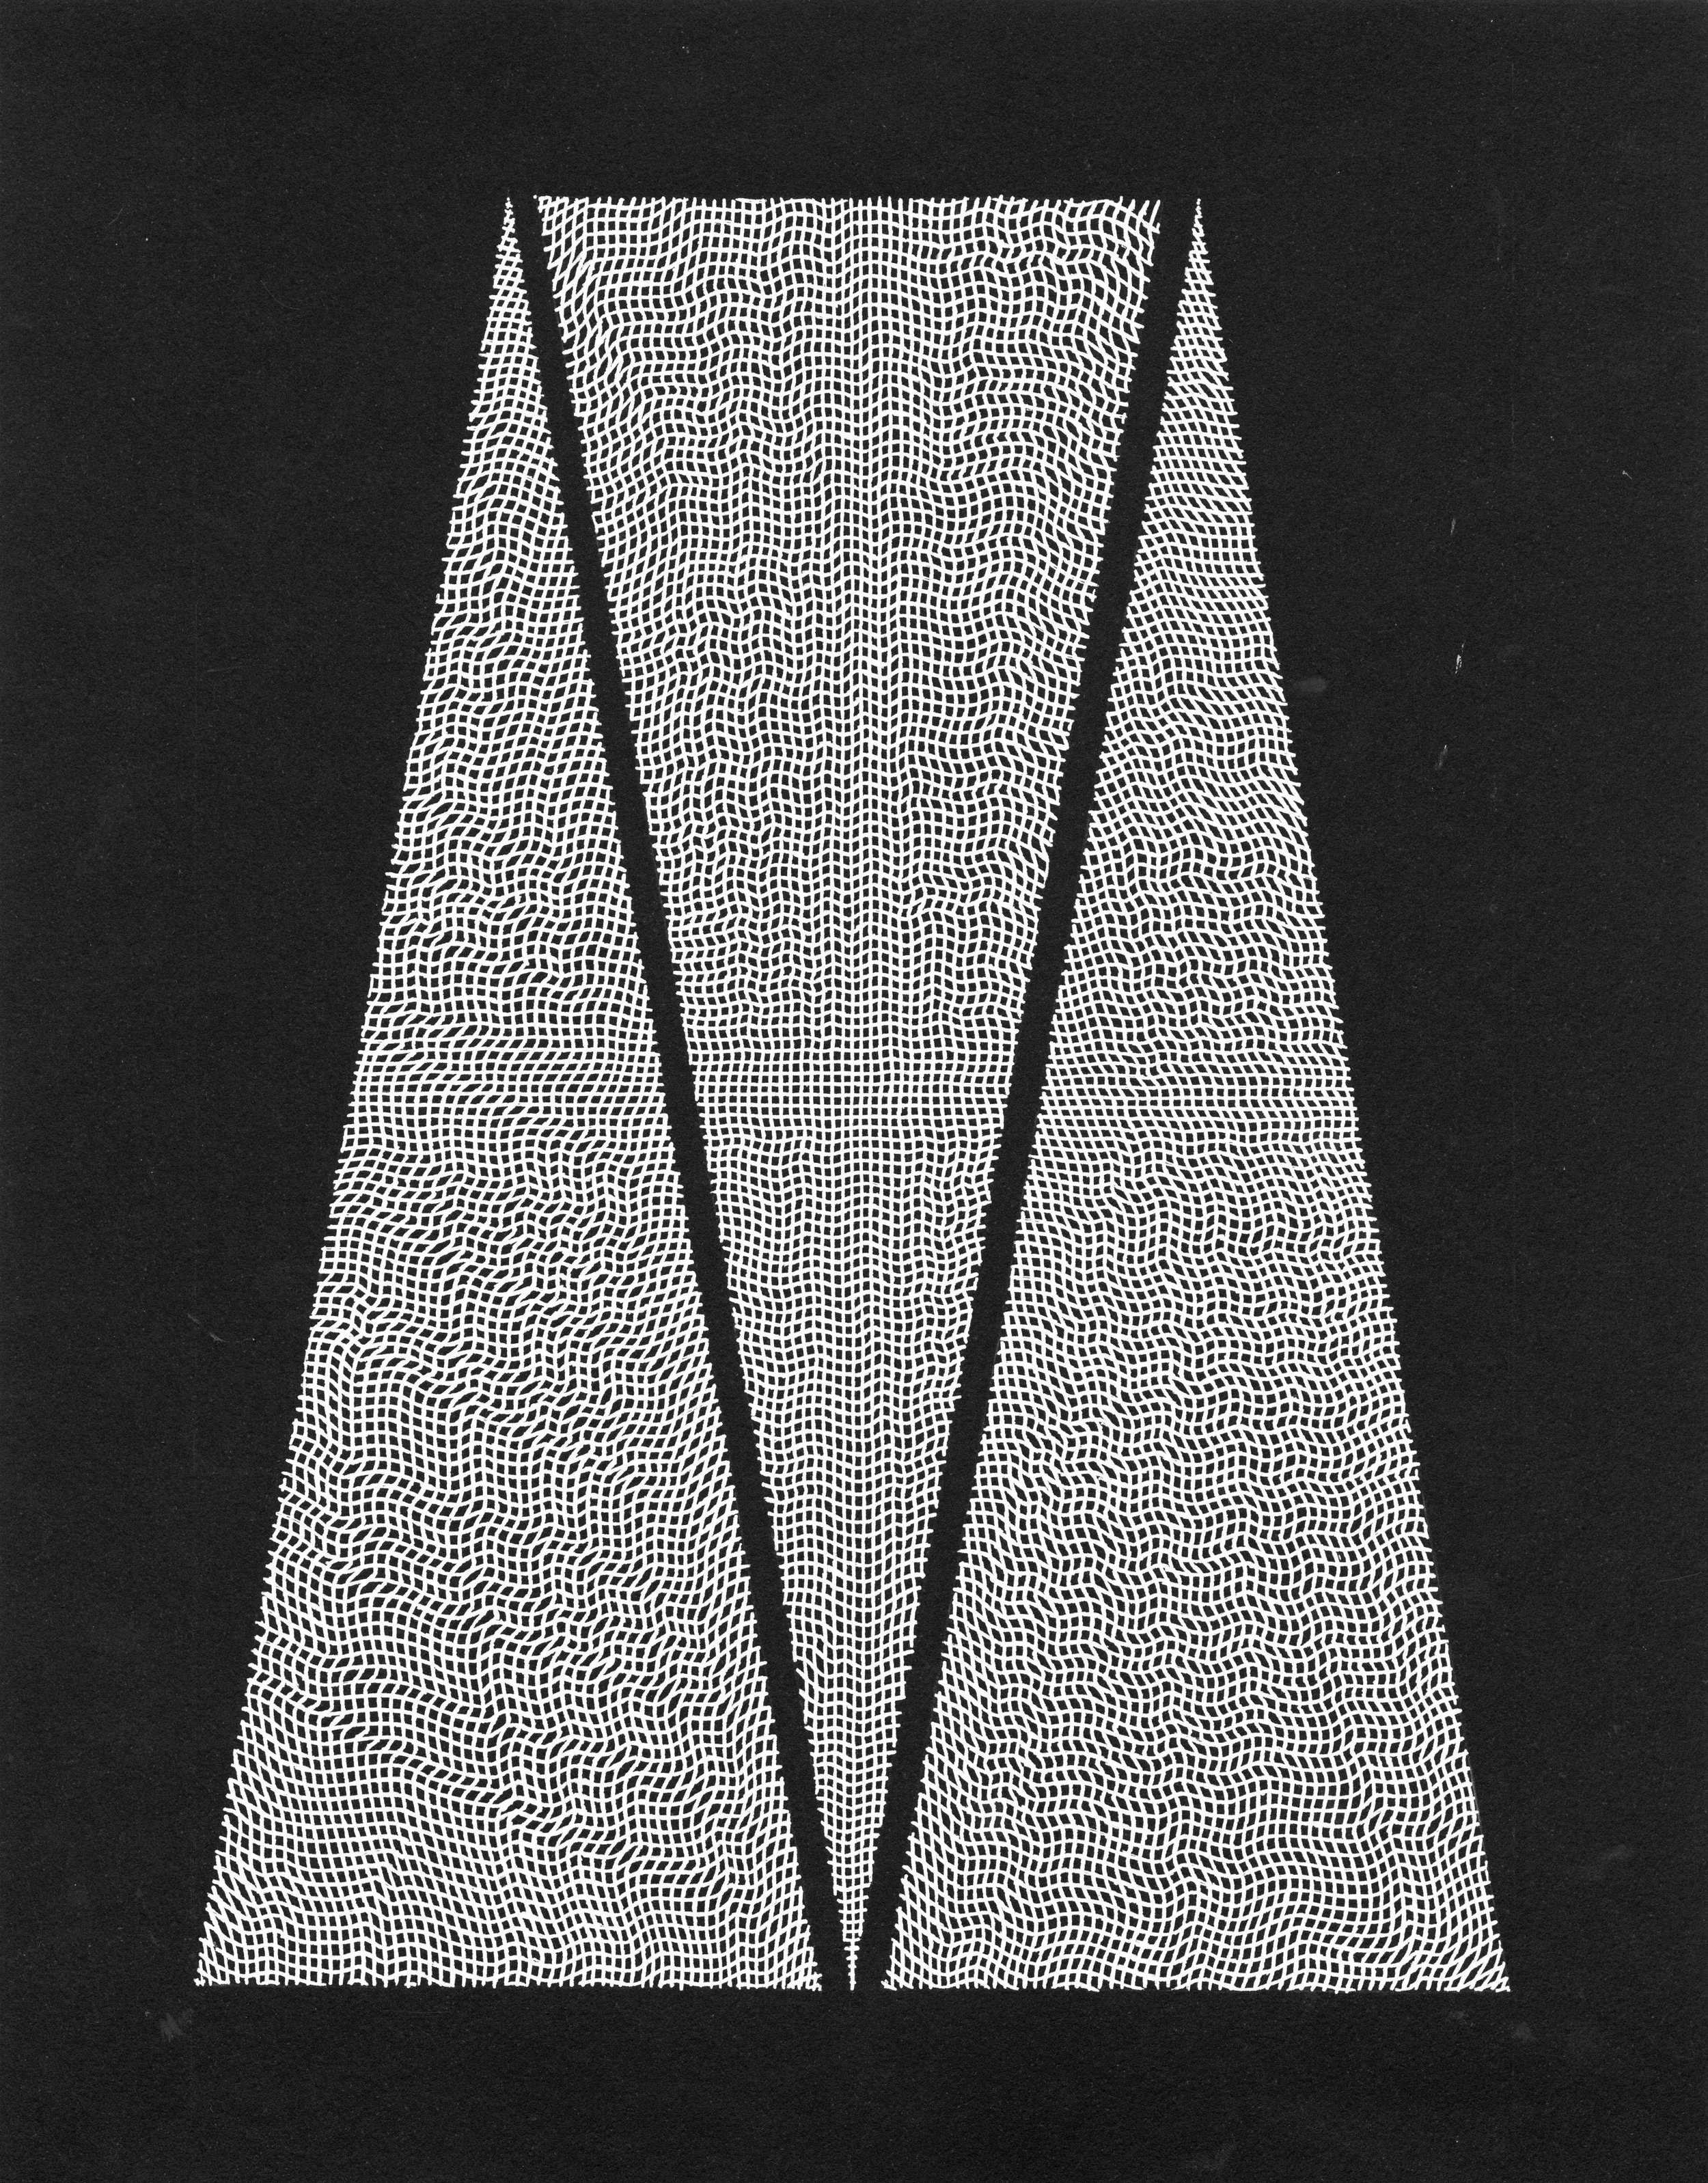 Untitled (Triangle Pattern no. 8)